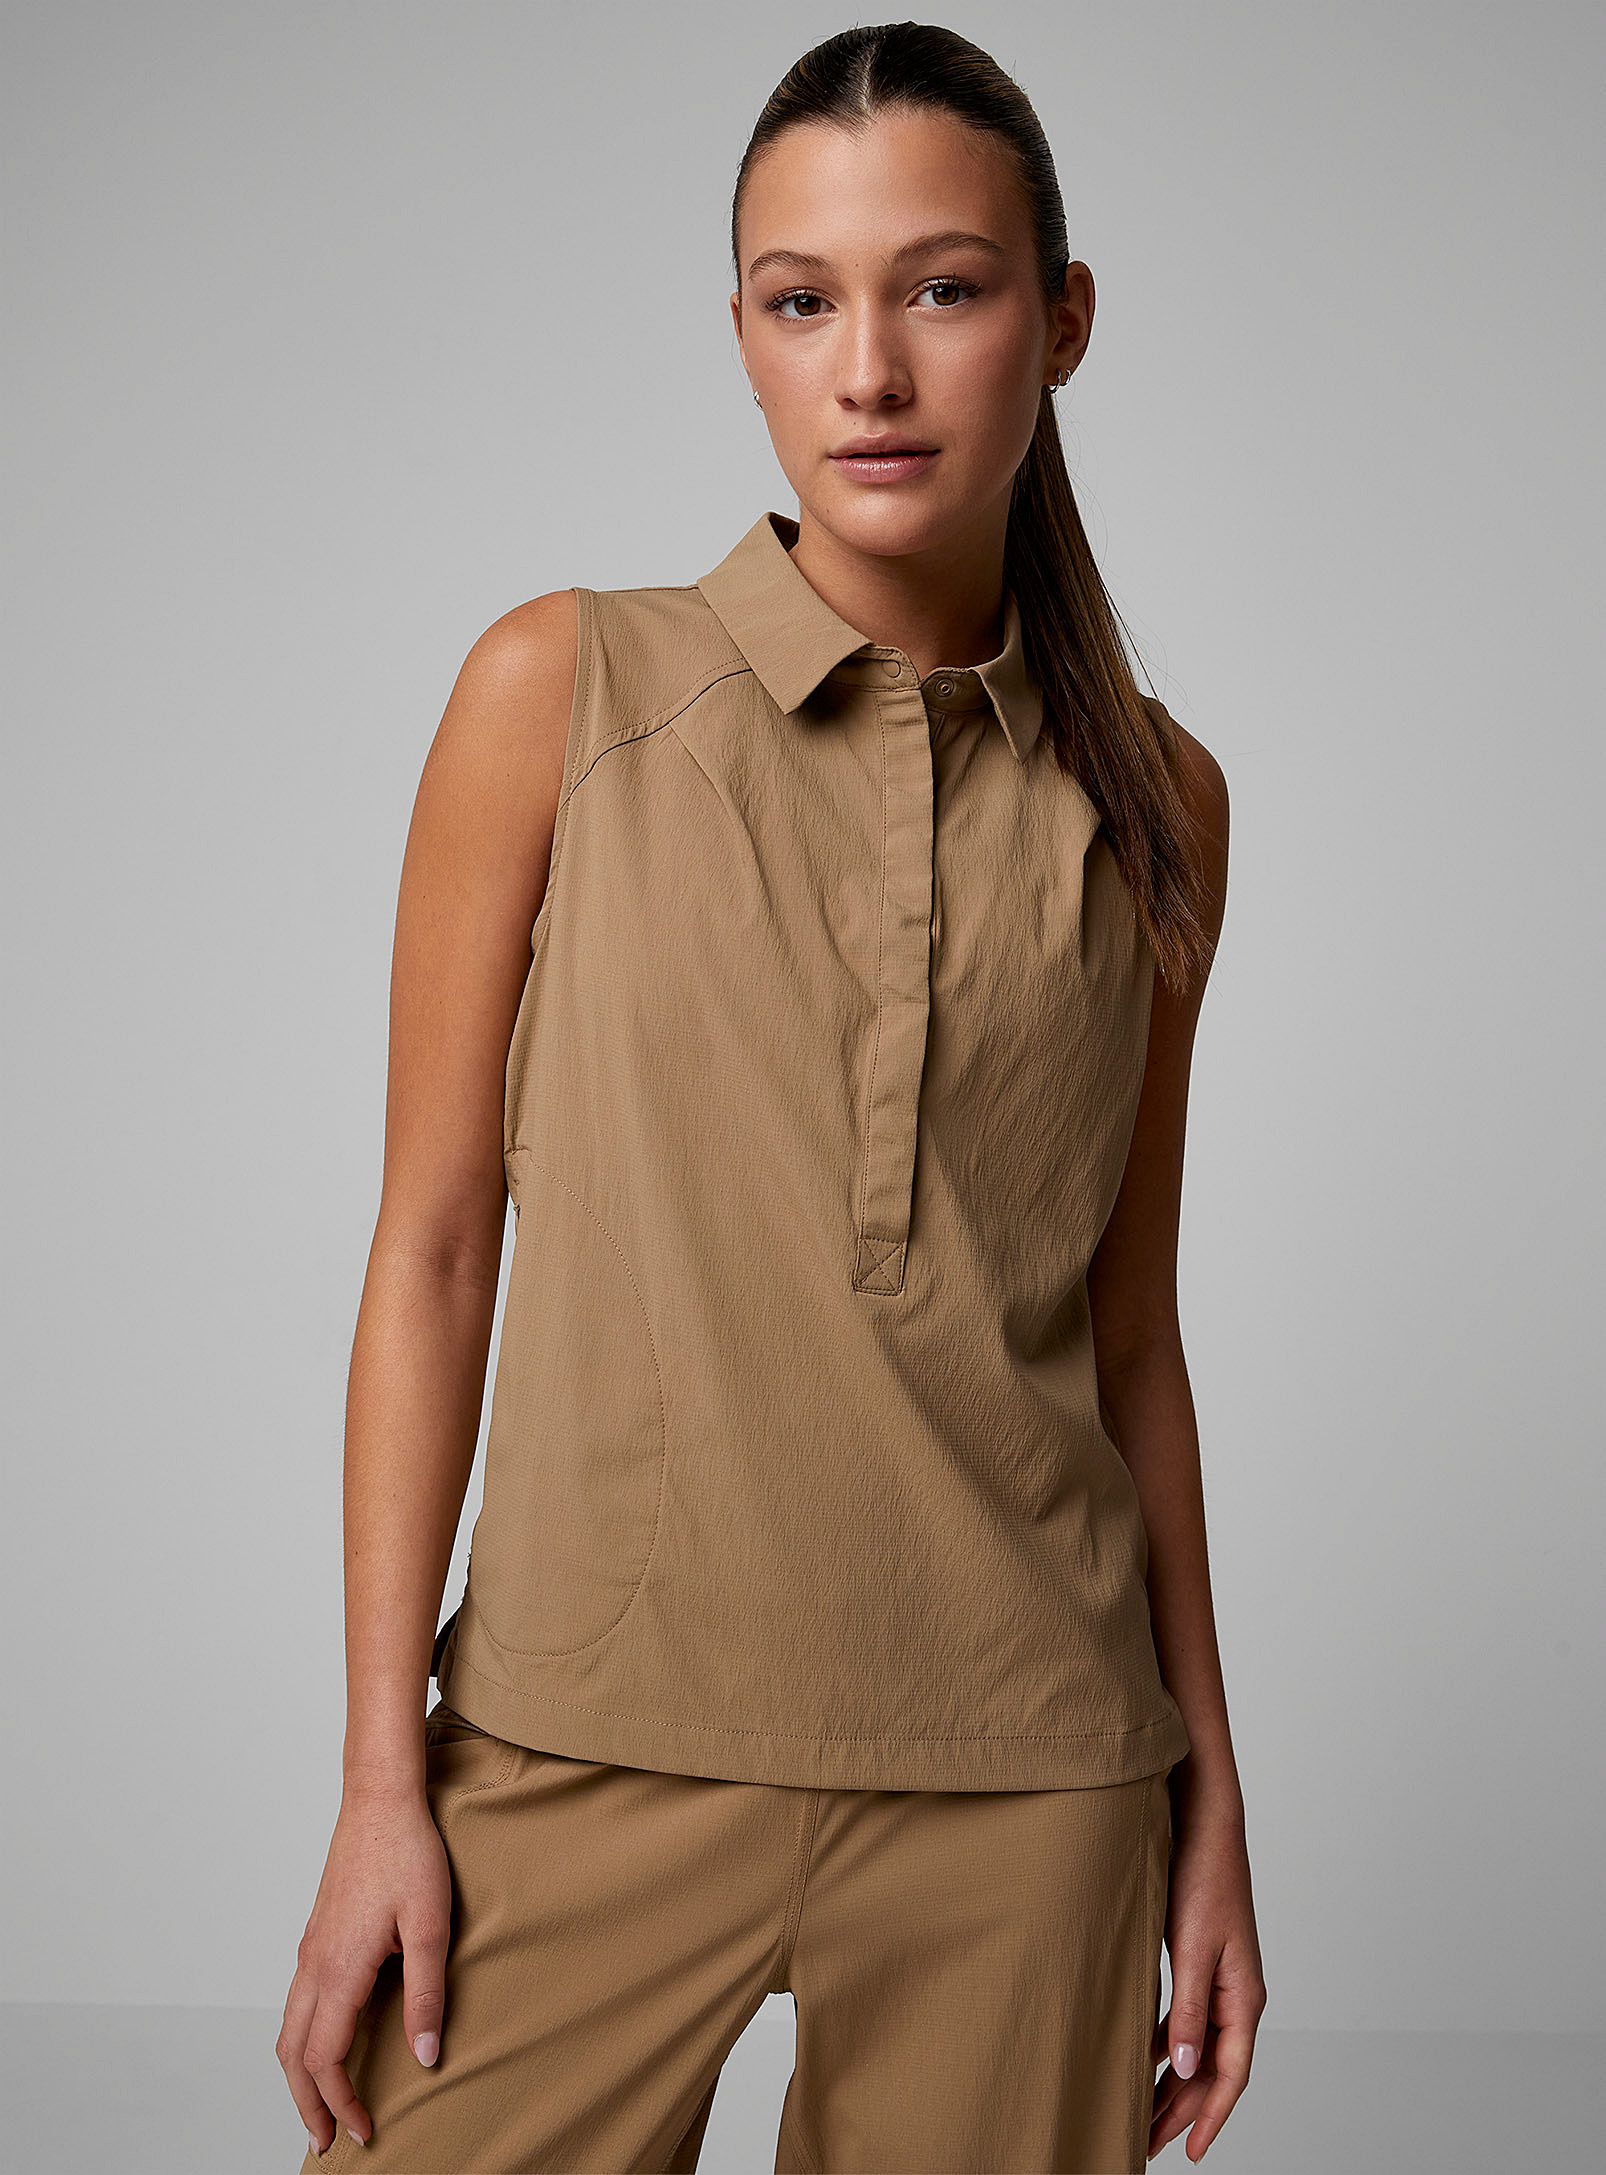 Indyeva - Women's Zufara II stretch ripstop blouse